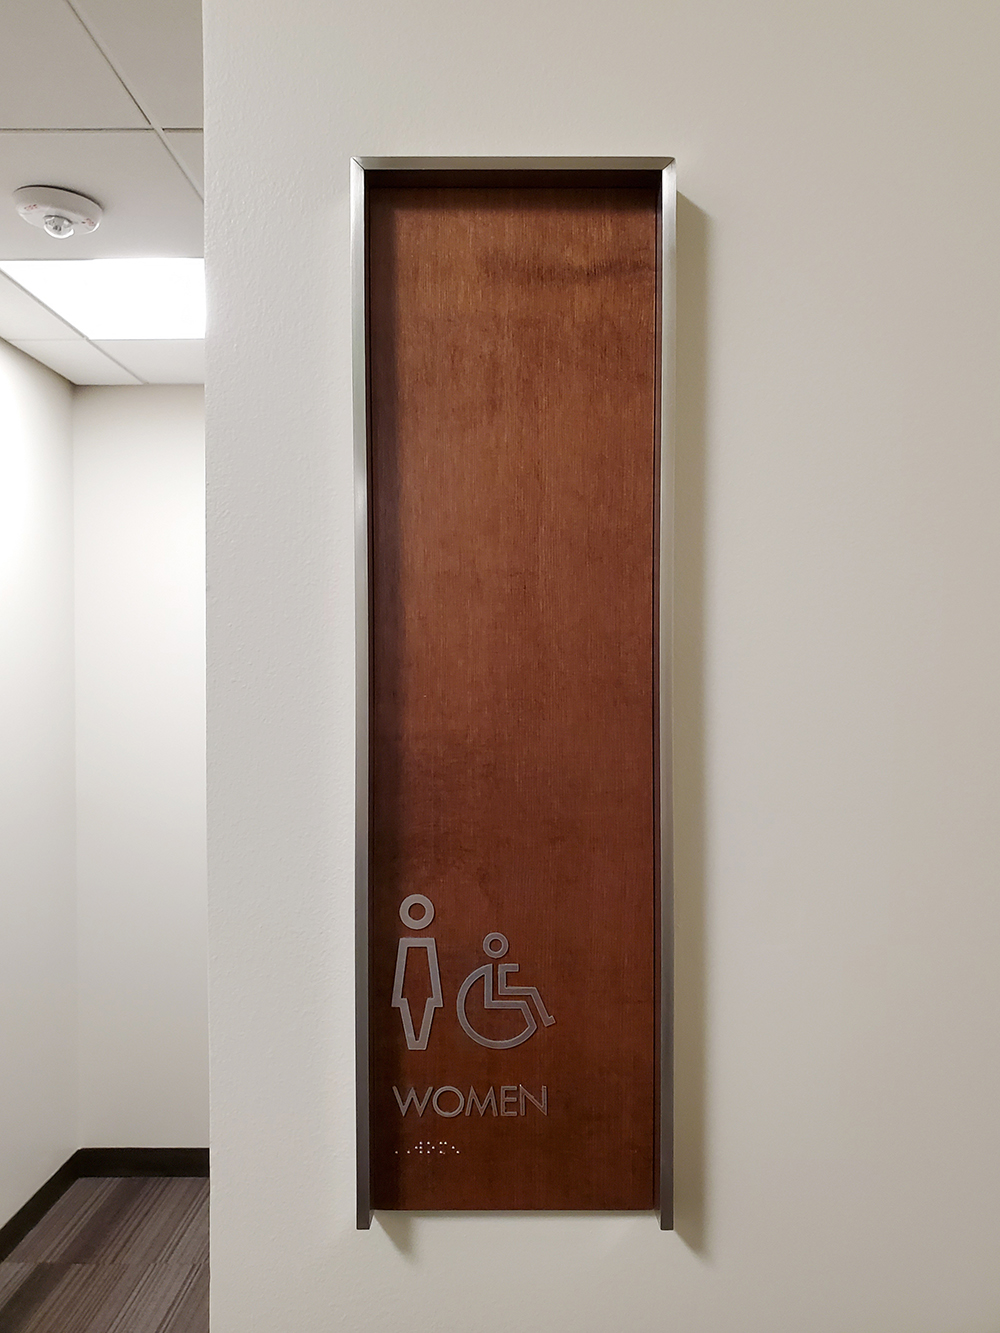 Women's public bathroom sign